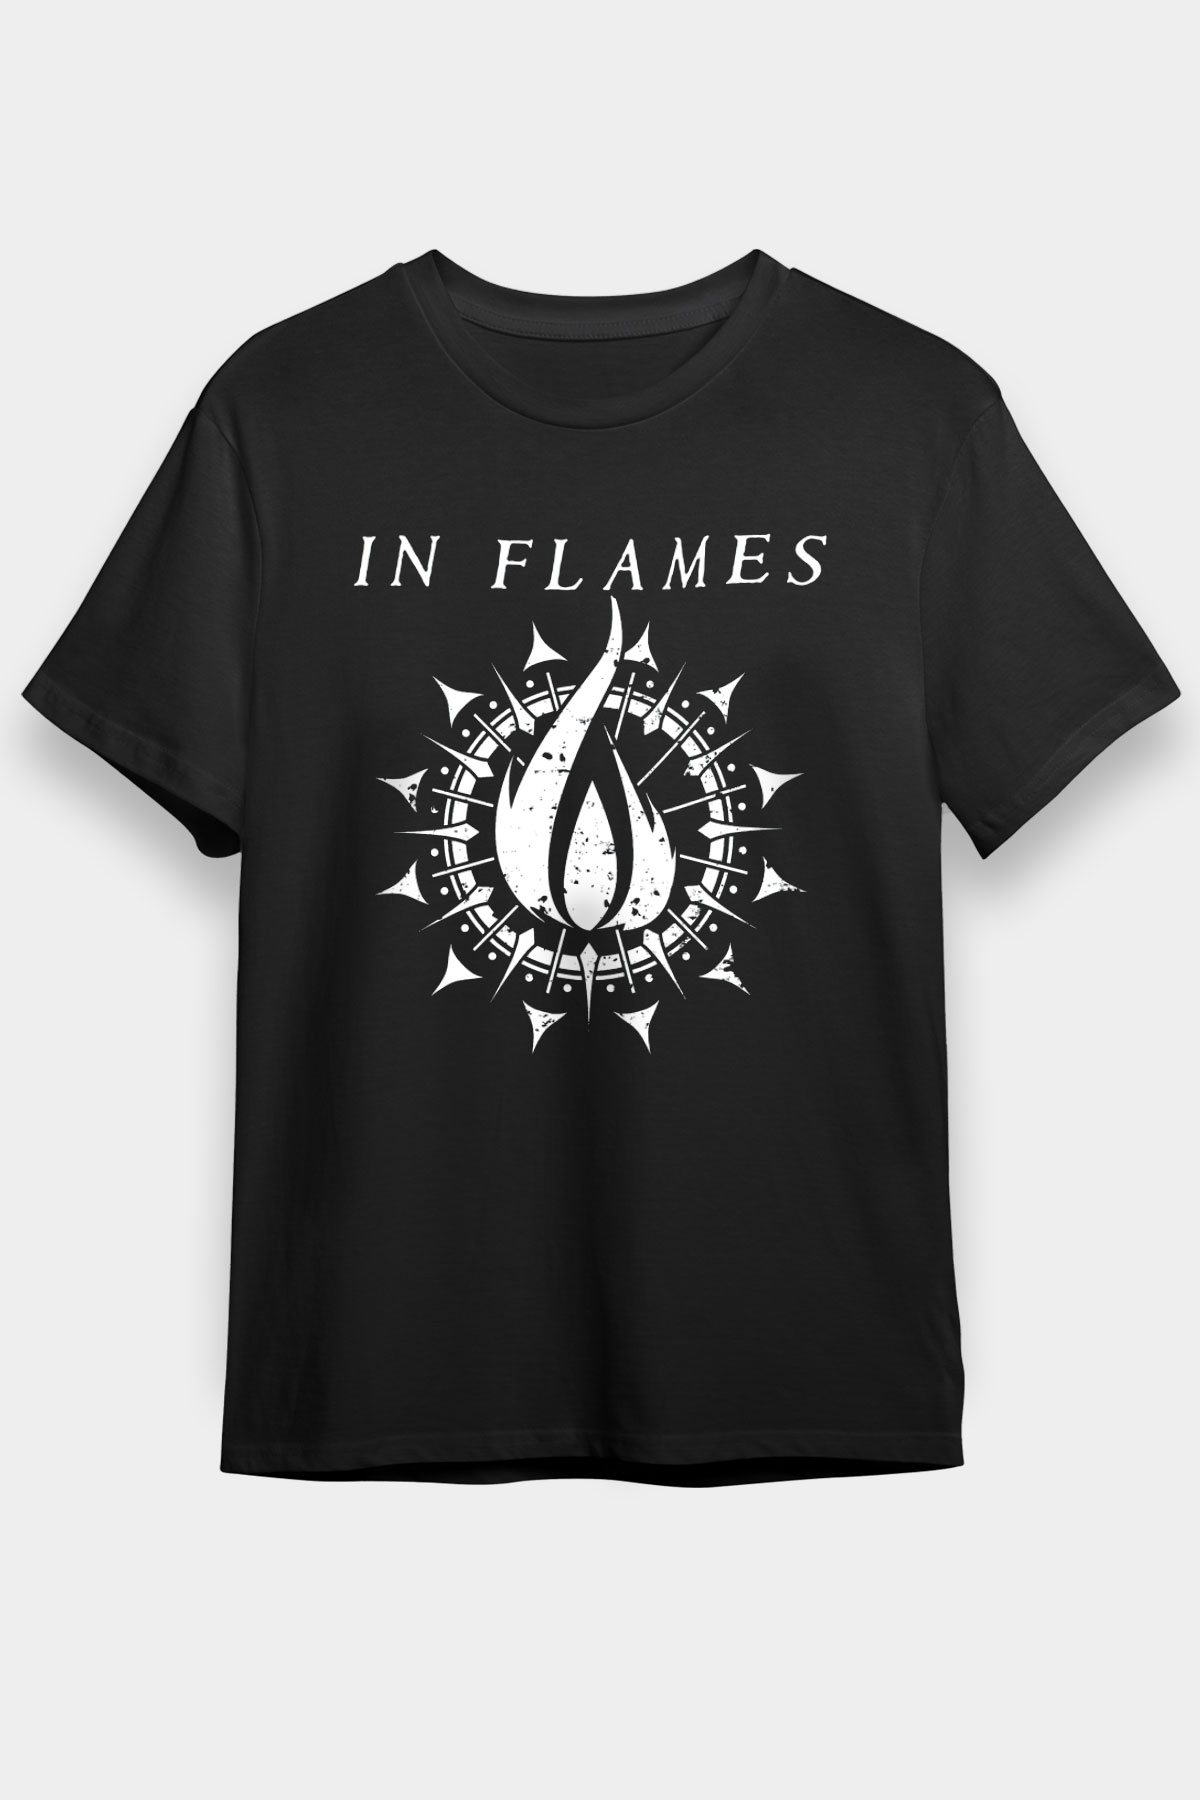 In Flames T shirt,Music Band,Unisex Tshirt 08